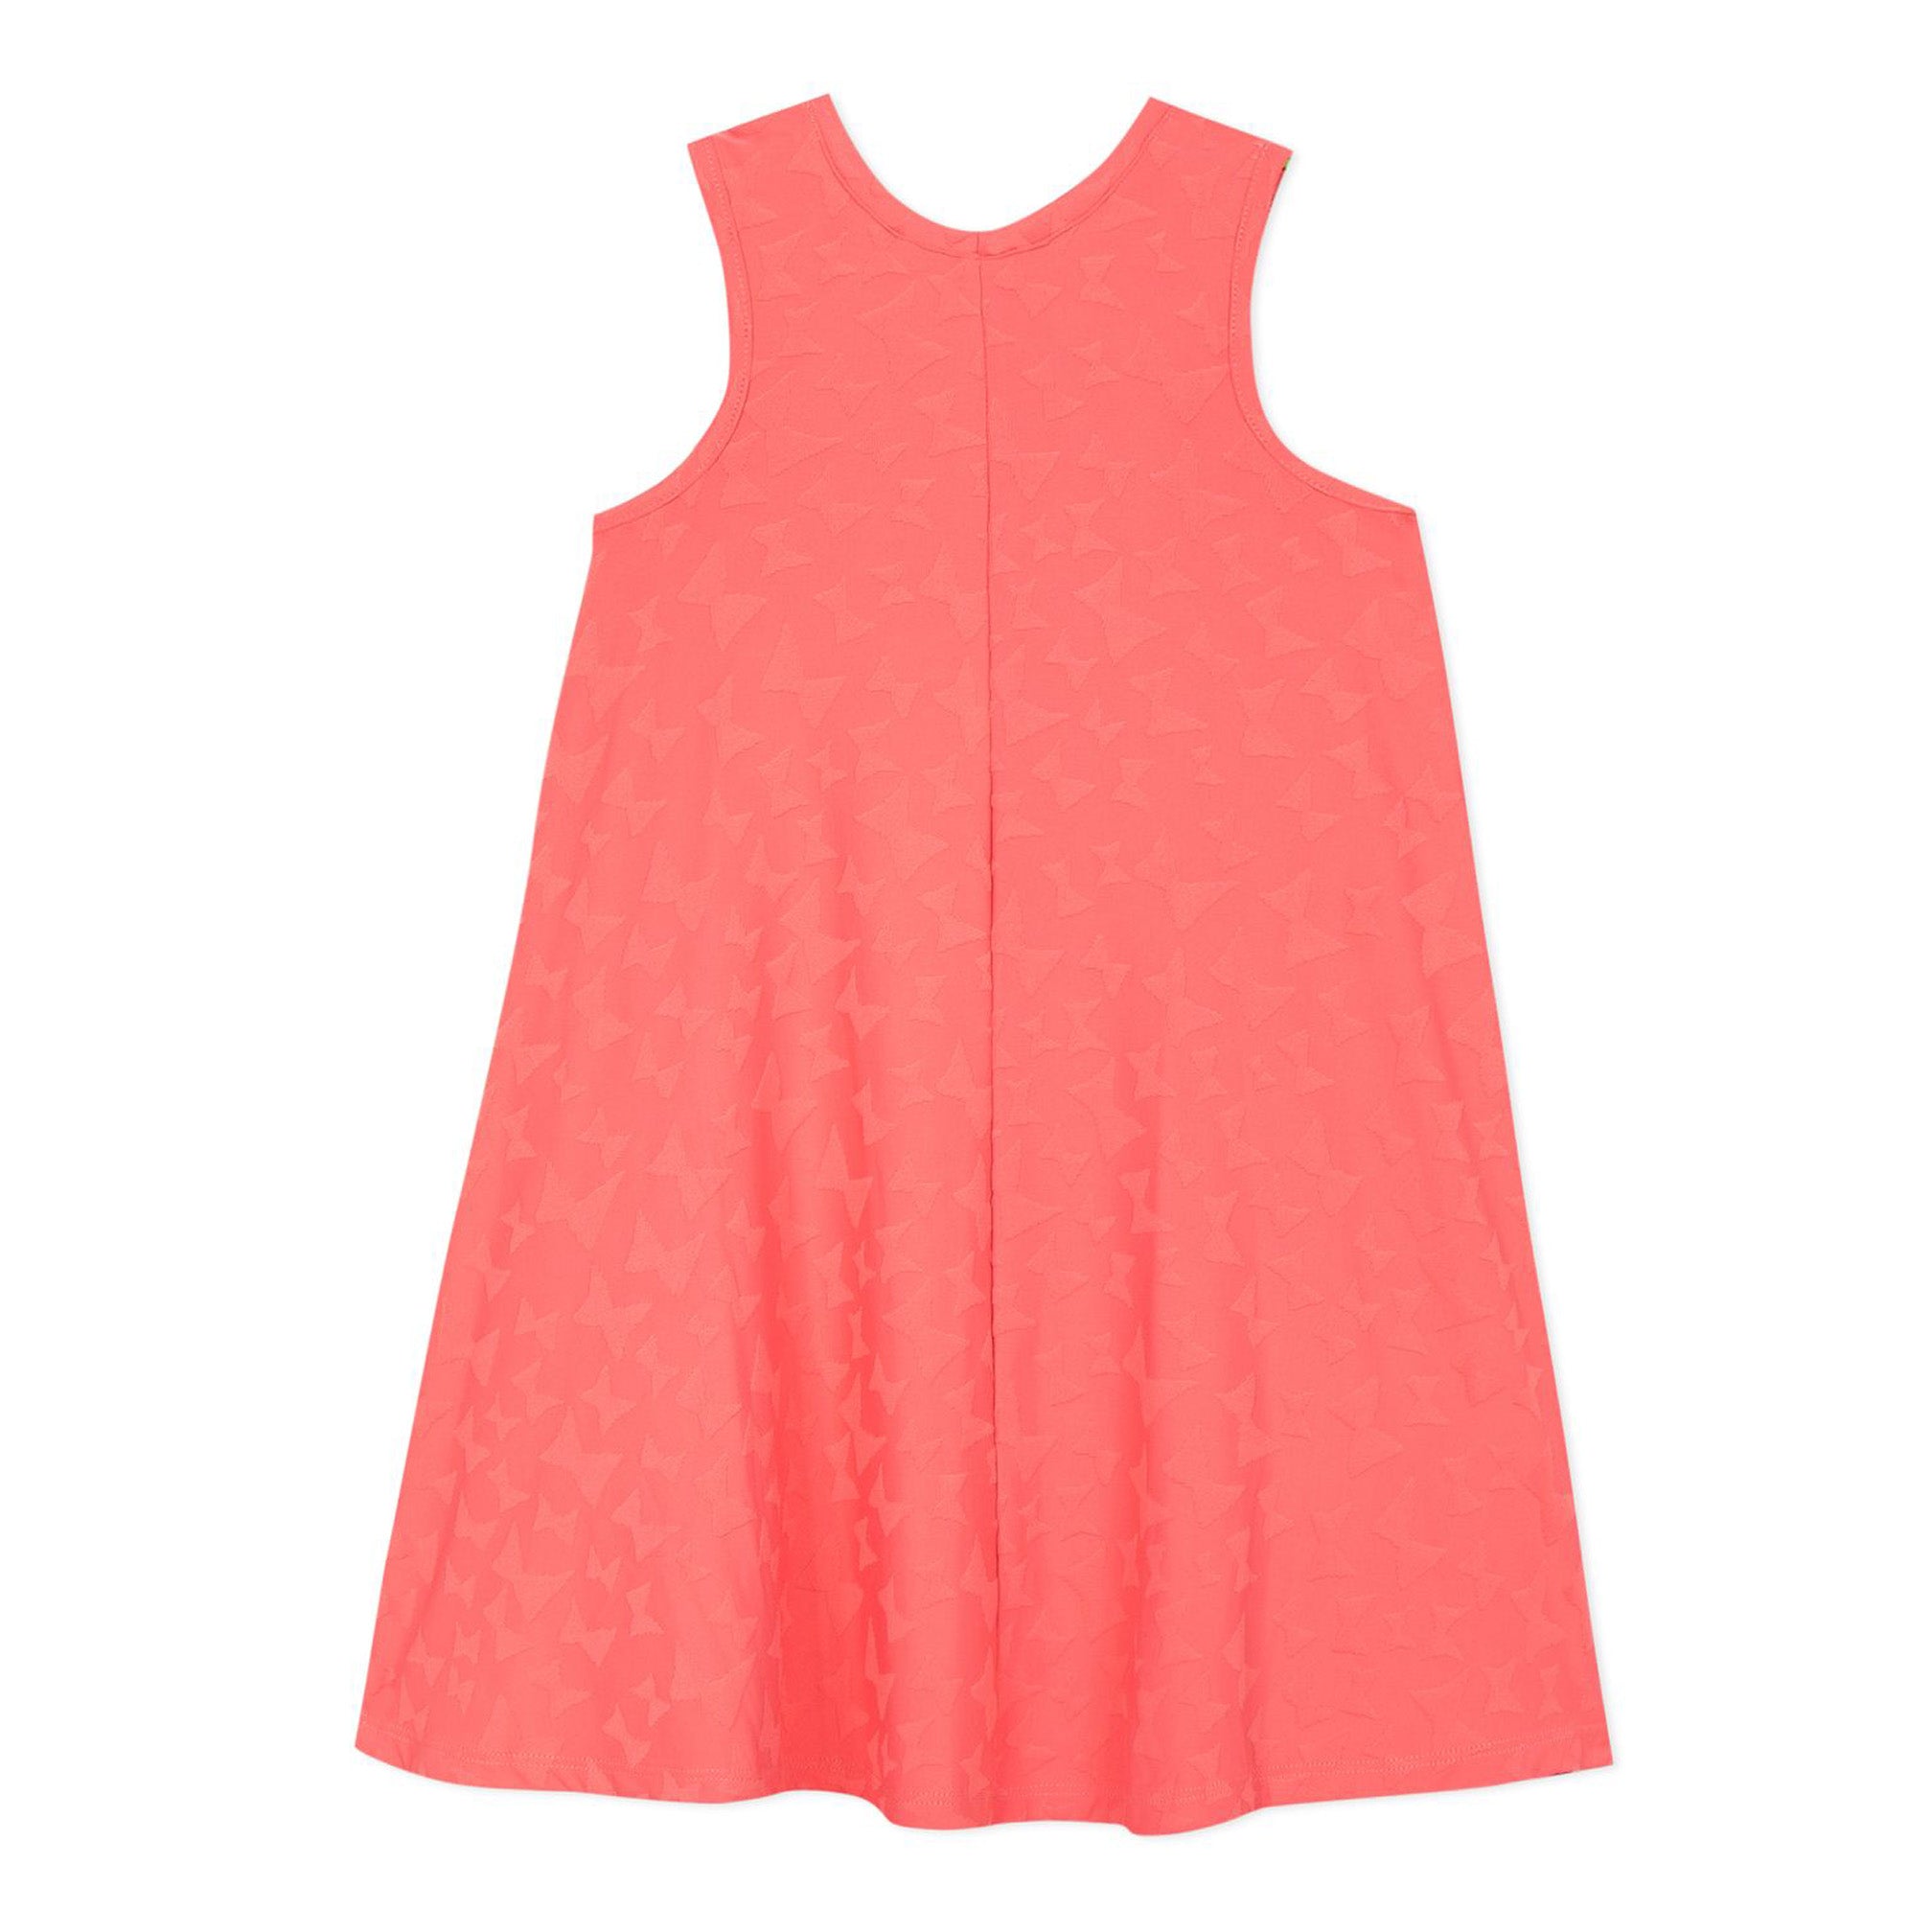 Lili Gaufrette A-Line Coral Dress